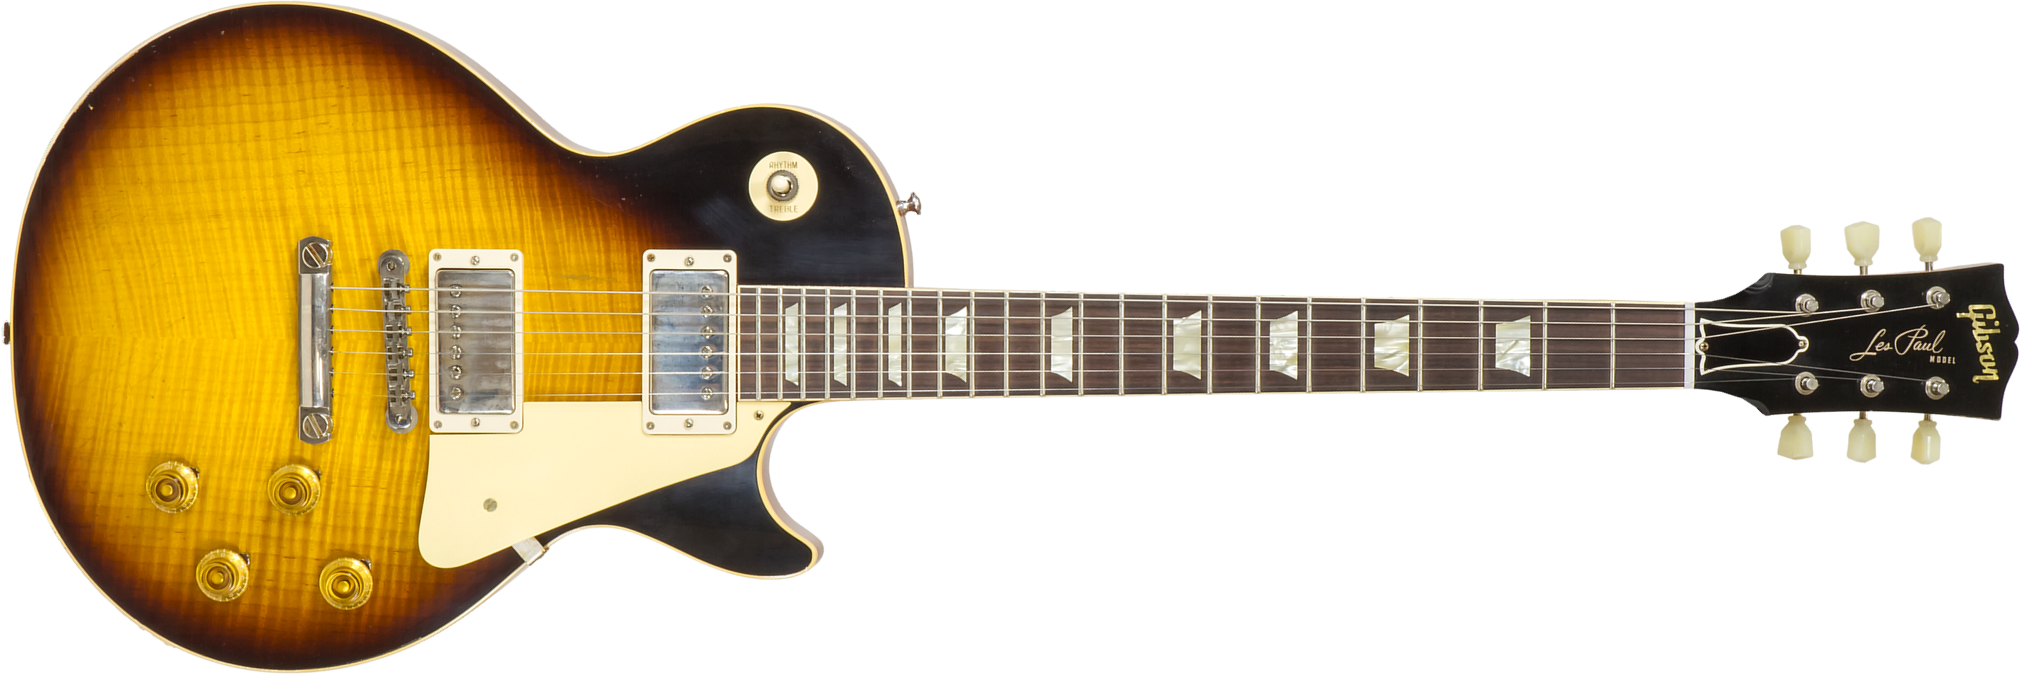 Gibson Custom Shop M2m Les Paul Standard 1959 2h Ht Rw #932131 - Murphy Lab Light Aged Kindred Burst - Single cut electric guitar - Main picture